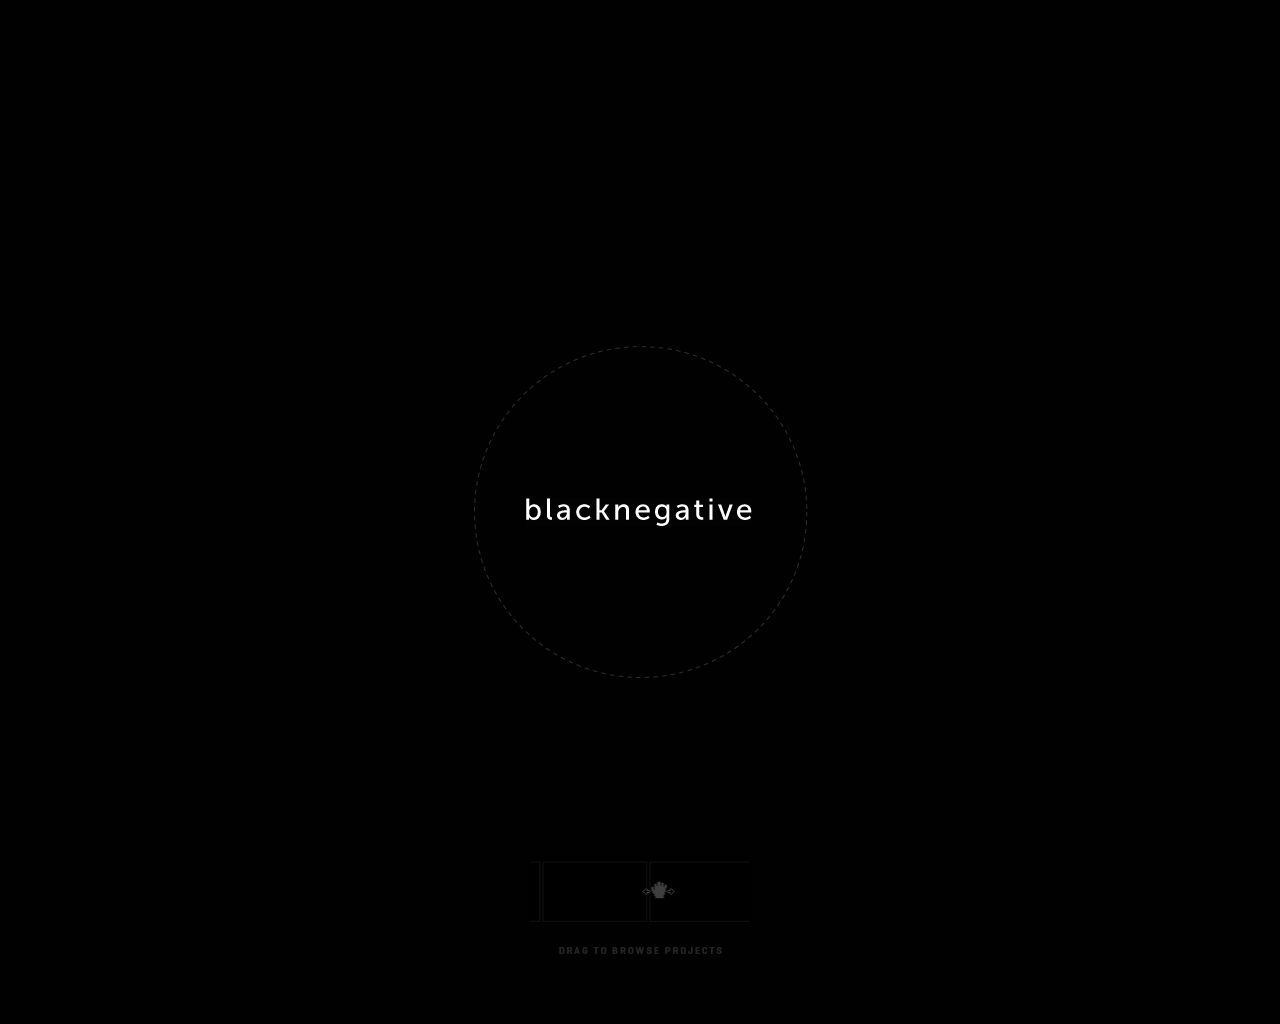 blacknegative.com